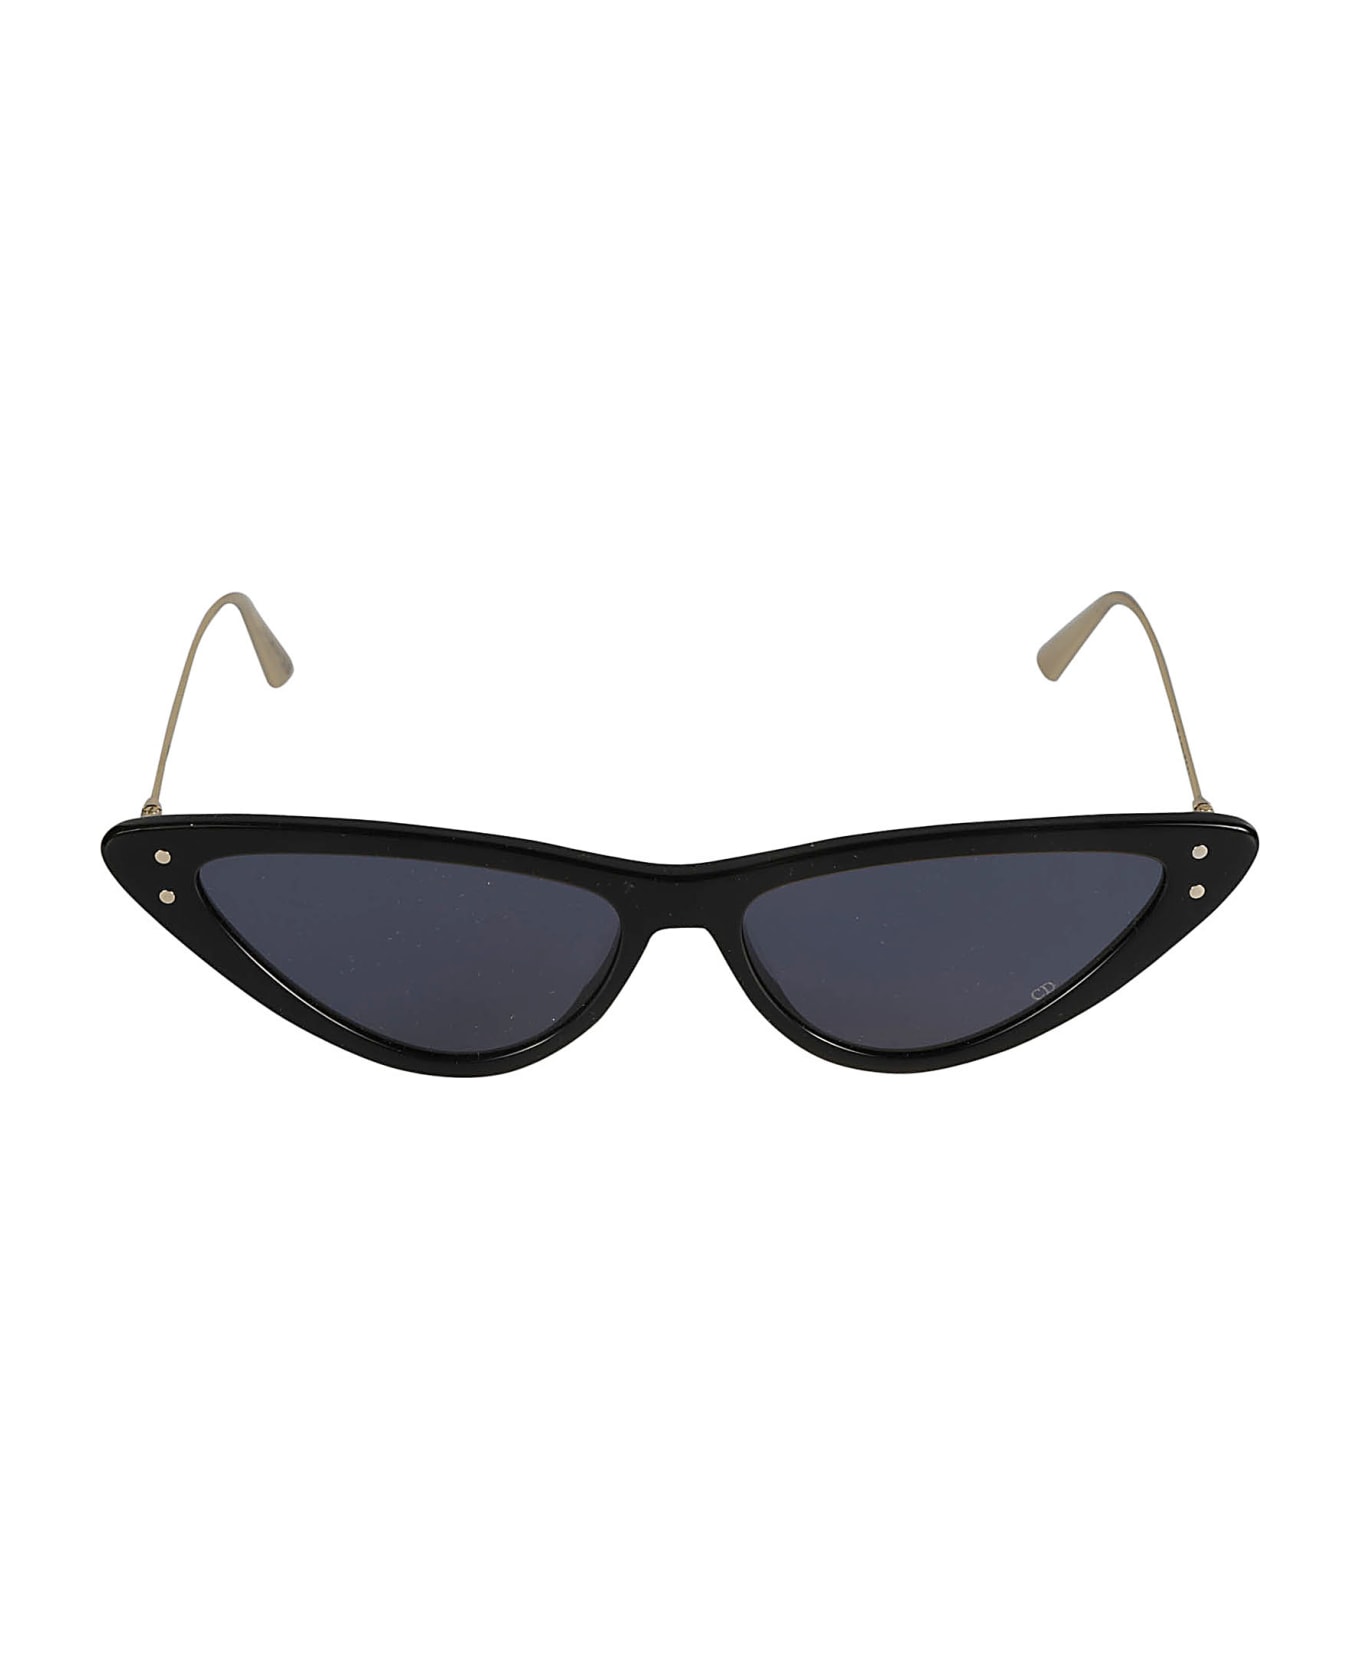 Dior Eyewear Missdior Sunglasses - 12b0 サングラス